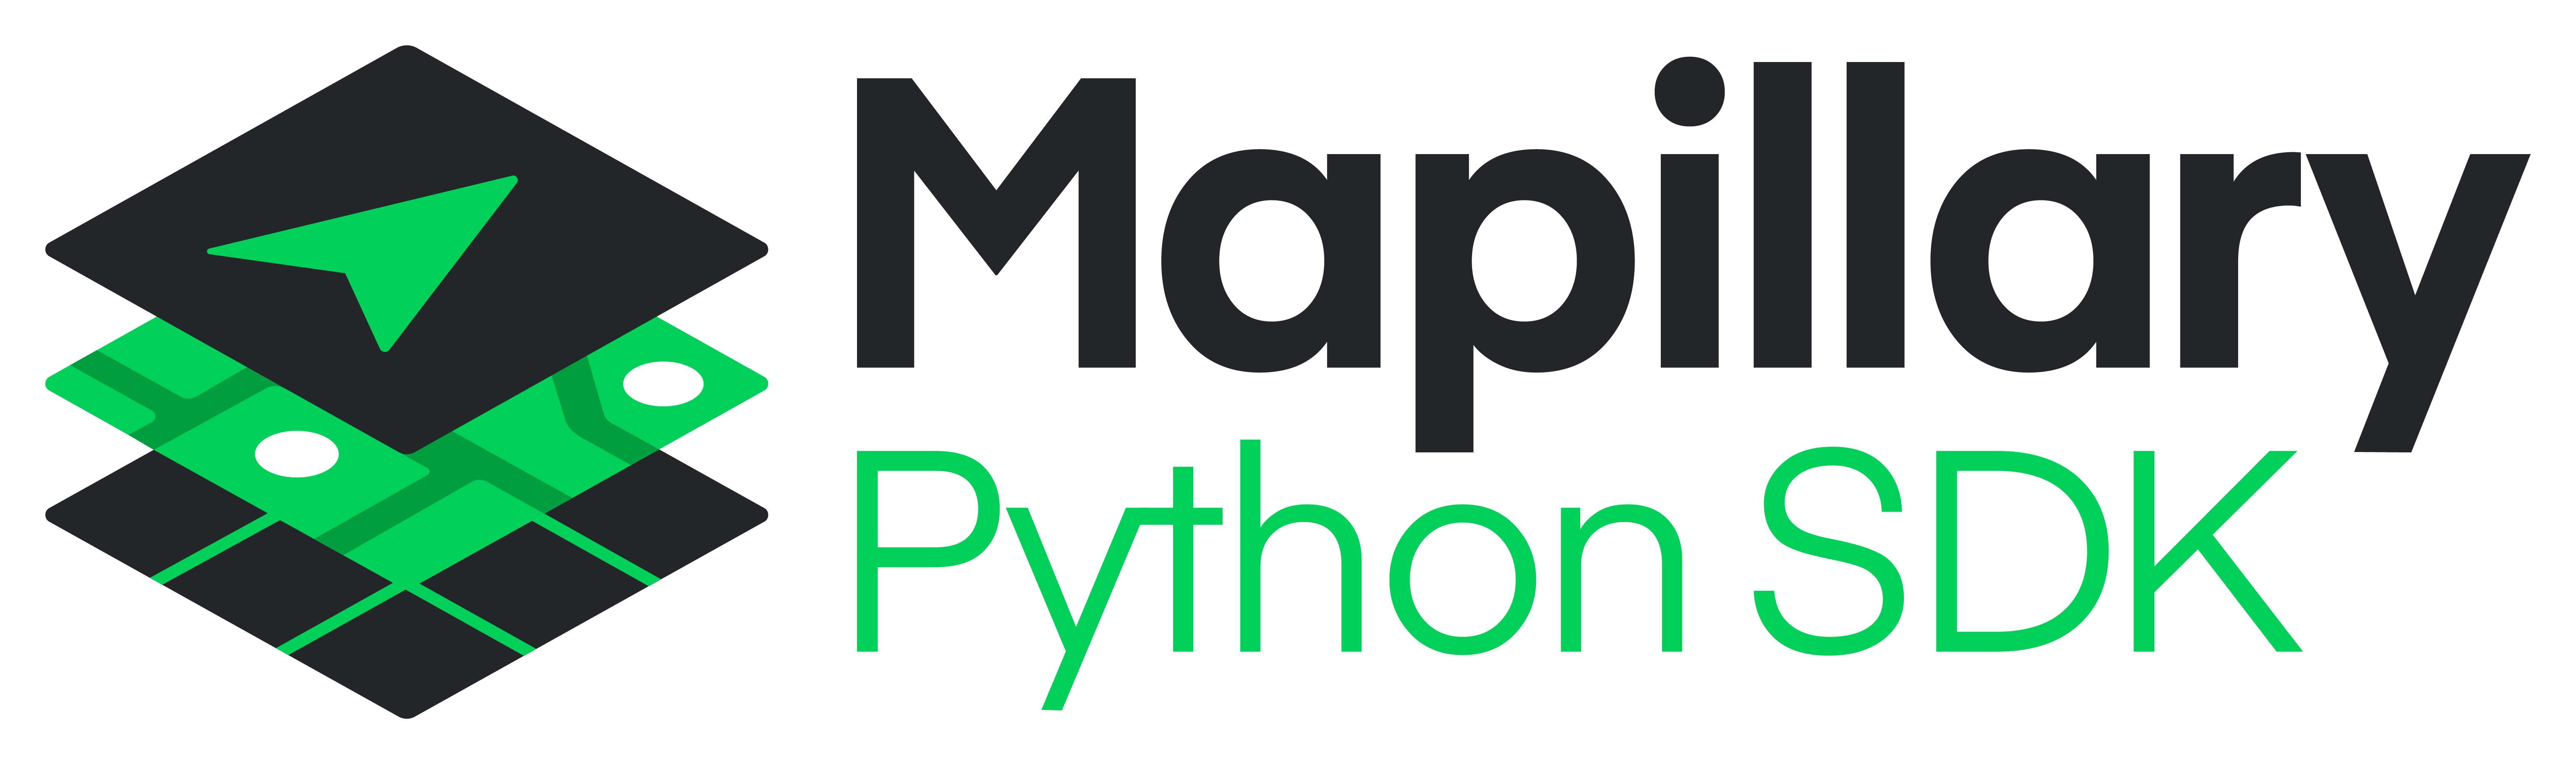 Mapillary Python SDK Logo